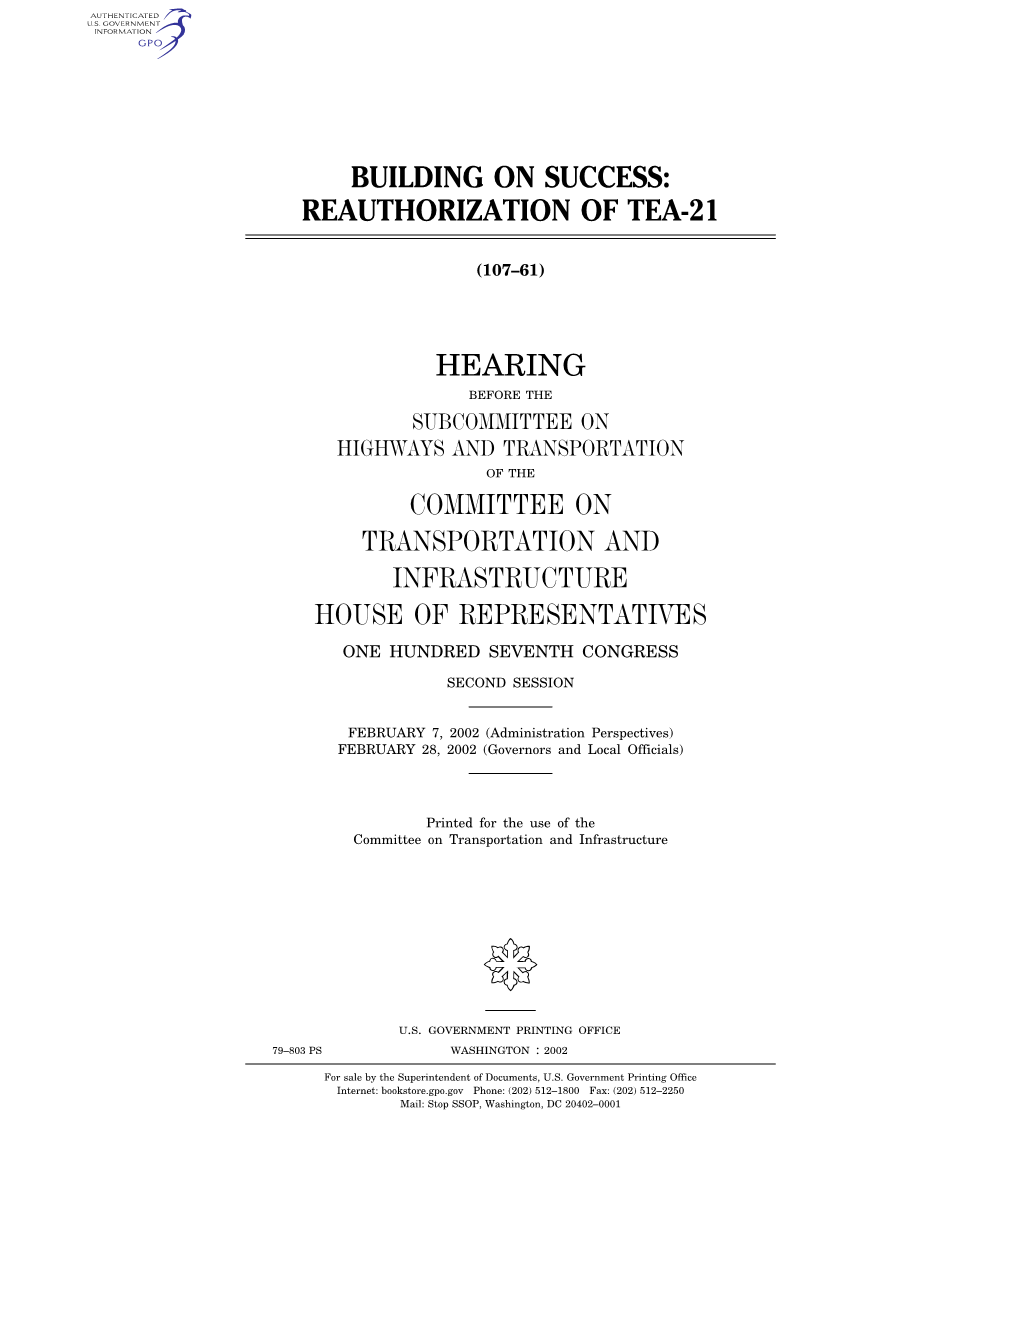 Reauthorization of Tea-21 Hearing Committee On